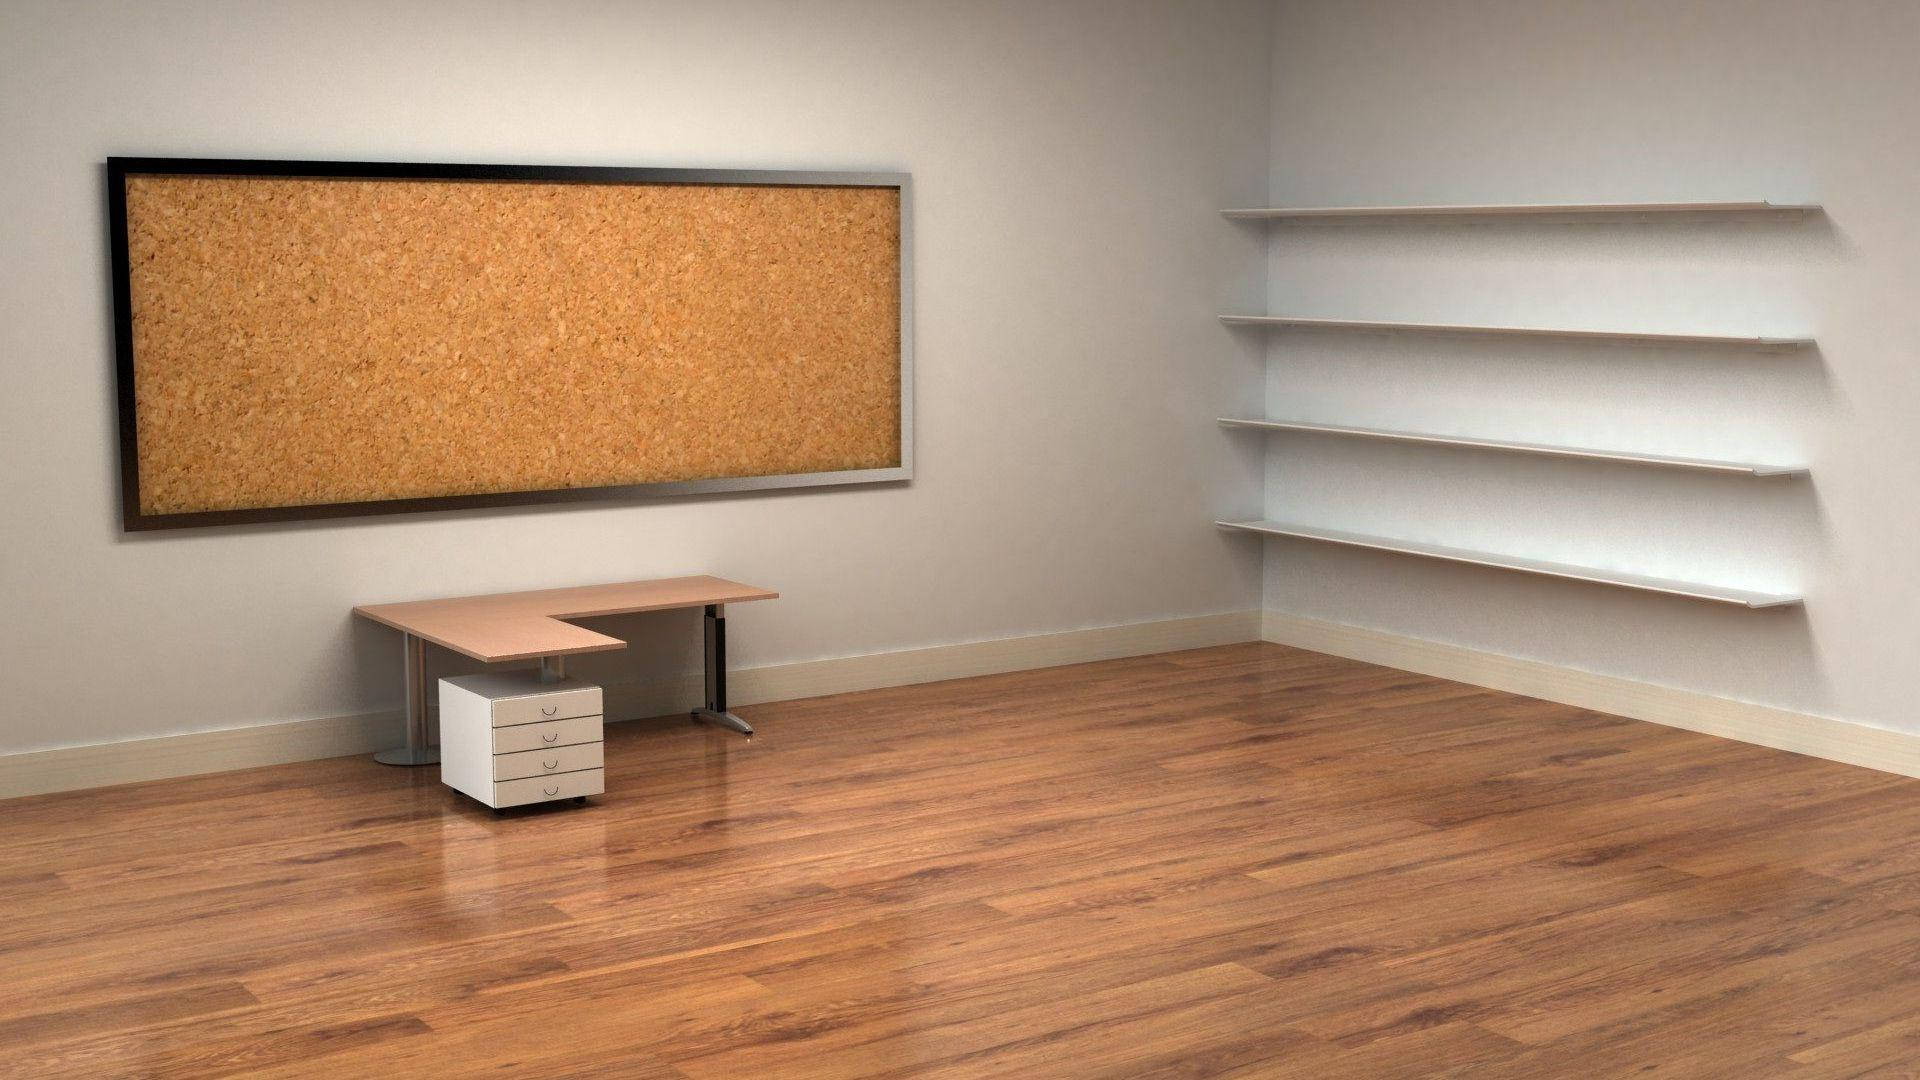 Organized Shelf and Corkboard in a Cozy Workspace Wallpaper